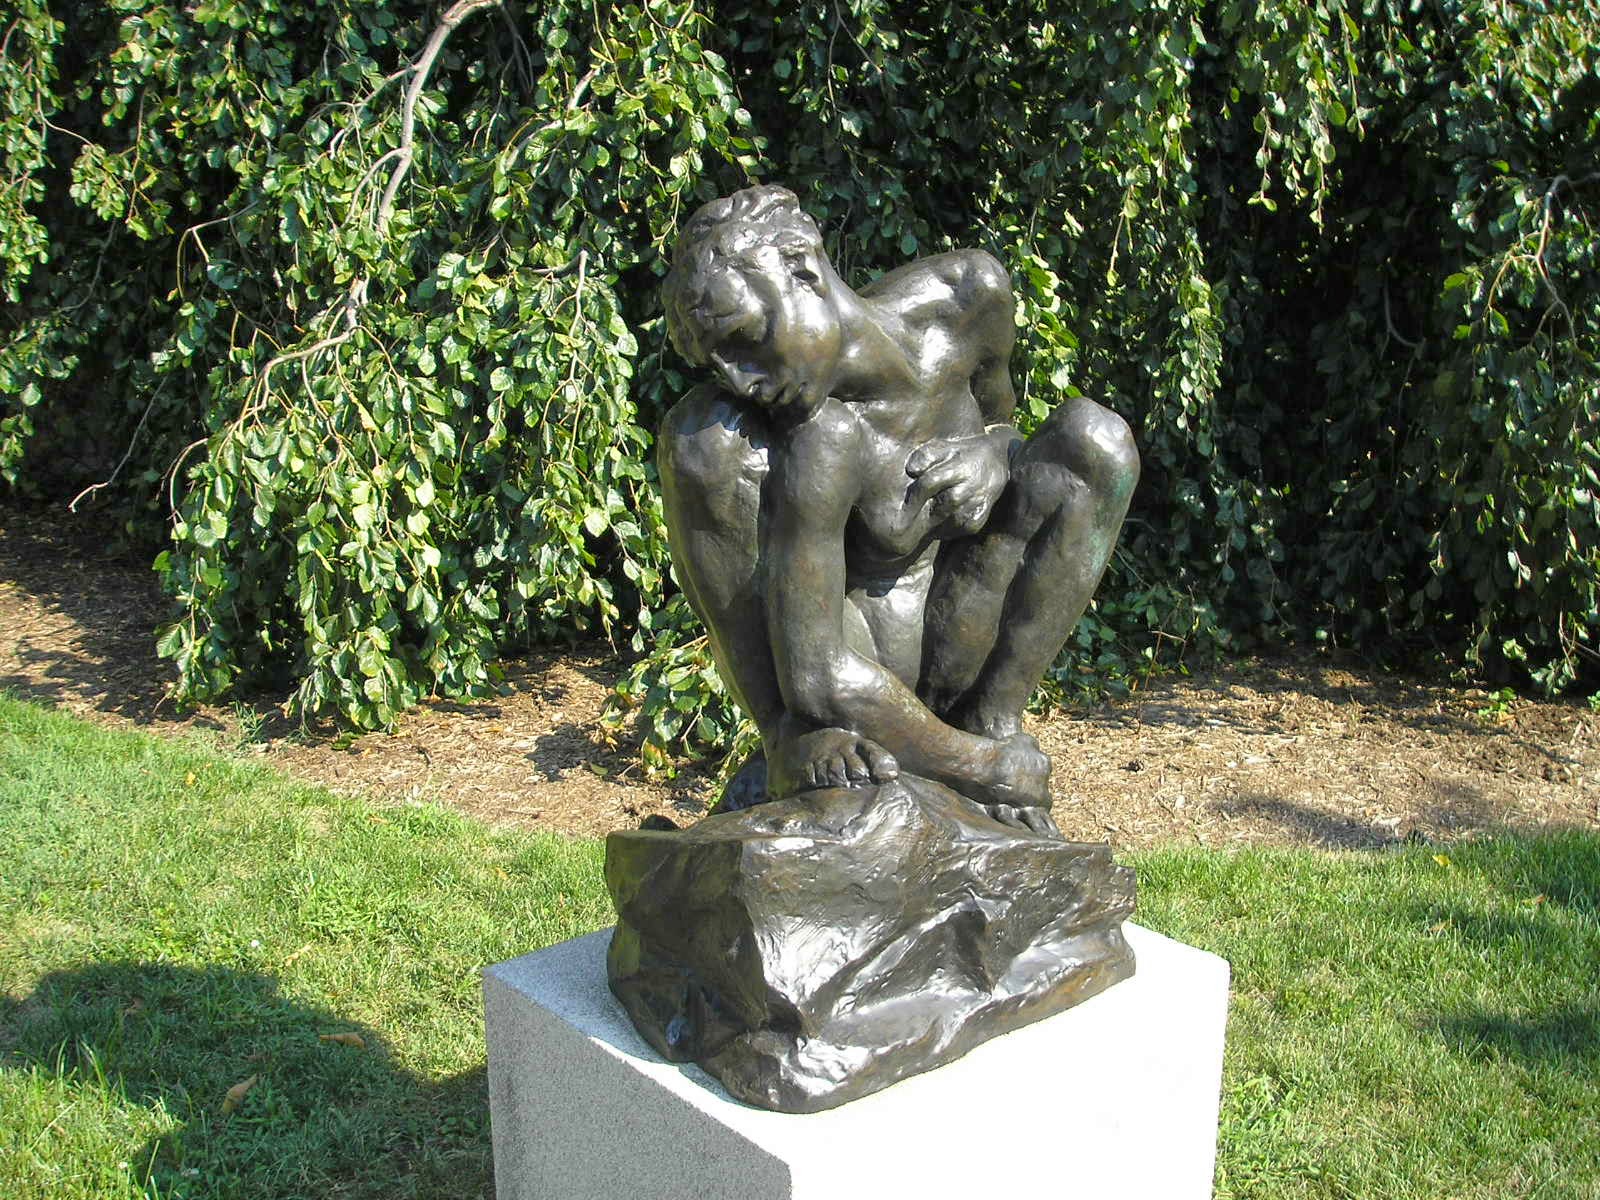 http://upload.wikimedia.org/wikipedia/commons/c/cf/Auguste_Rodin_001.jpg